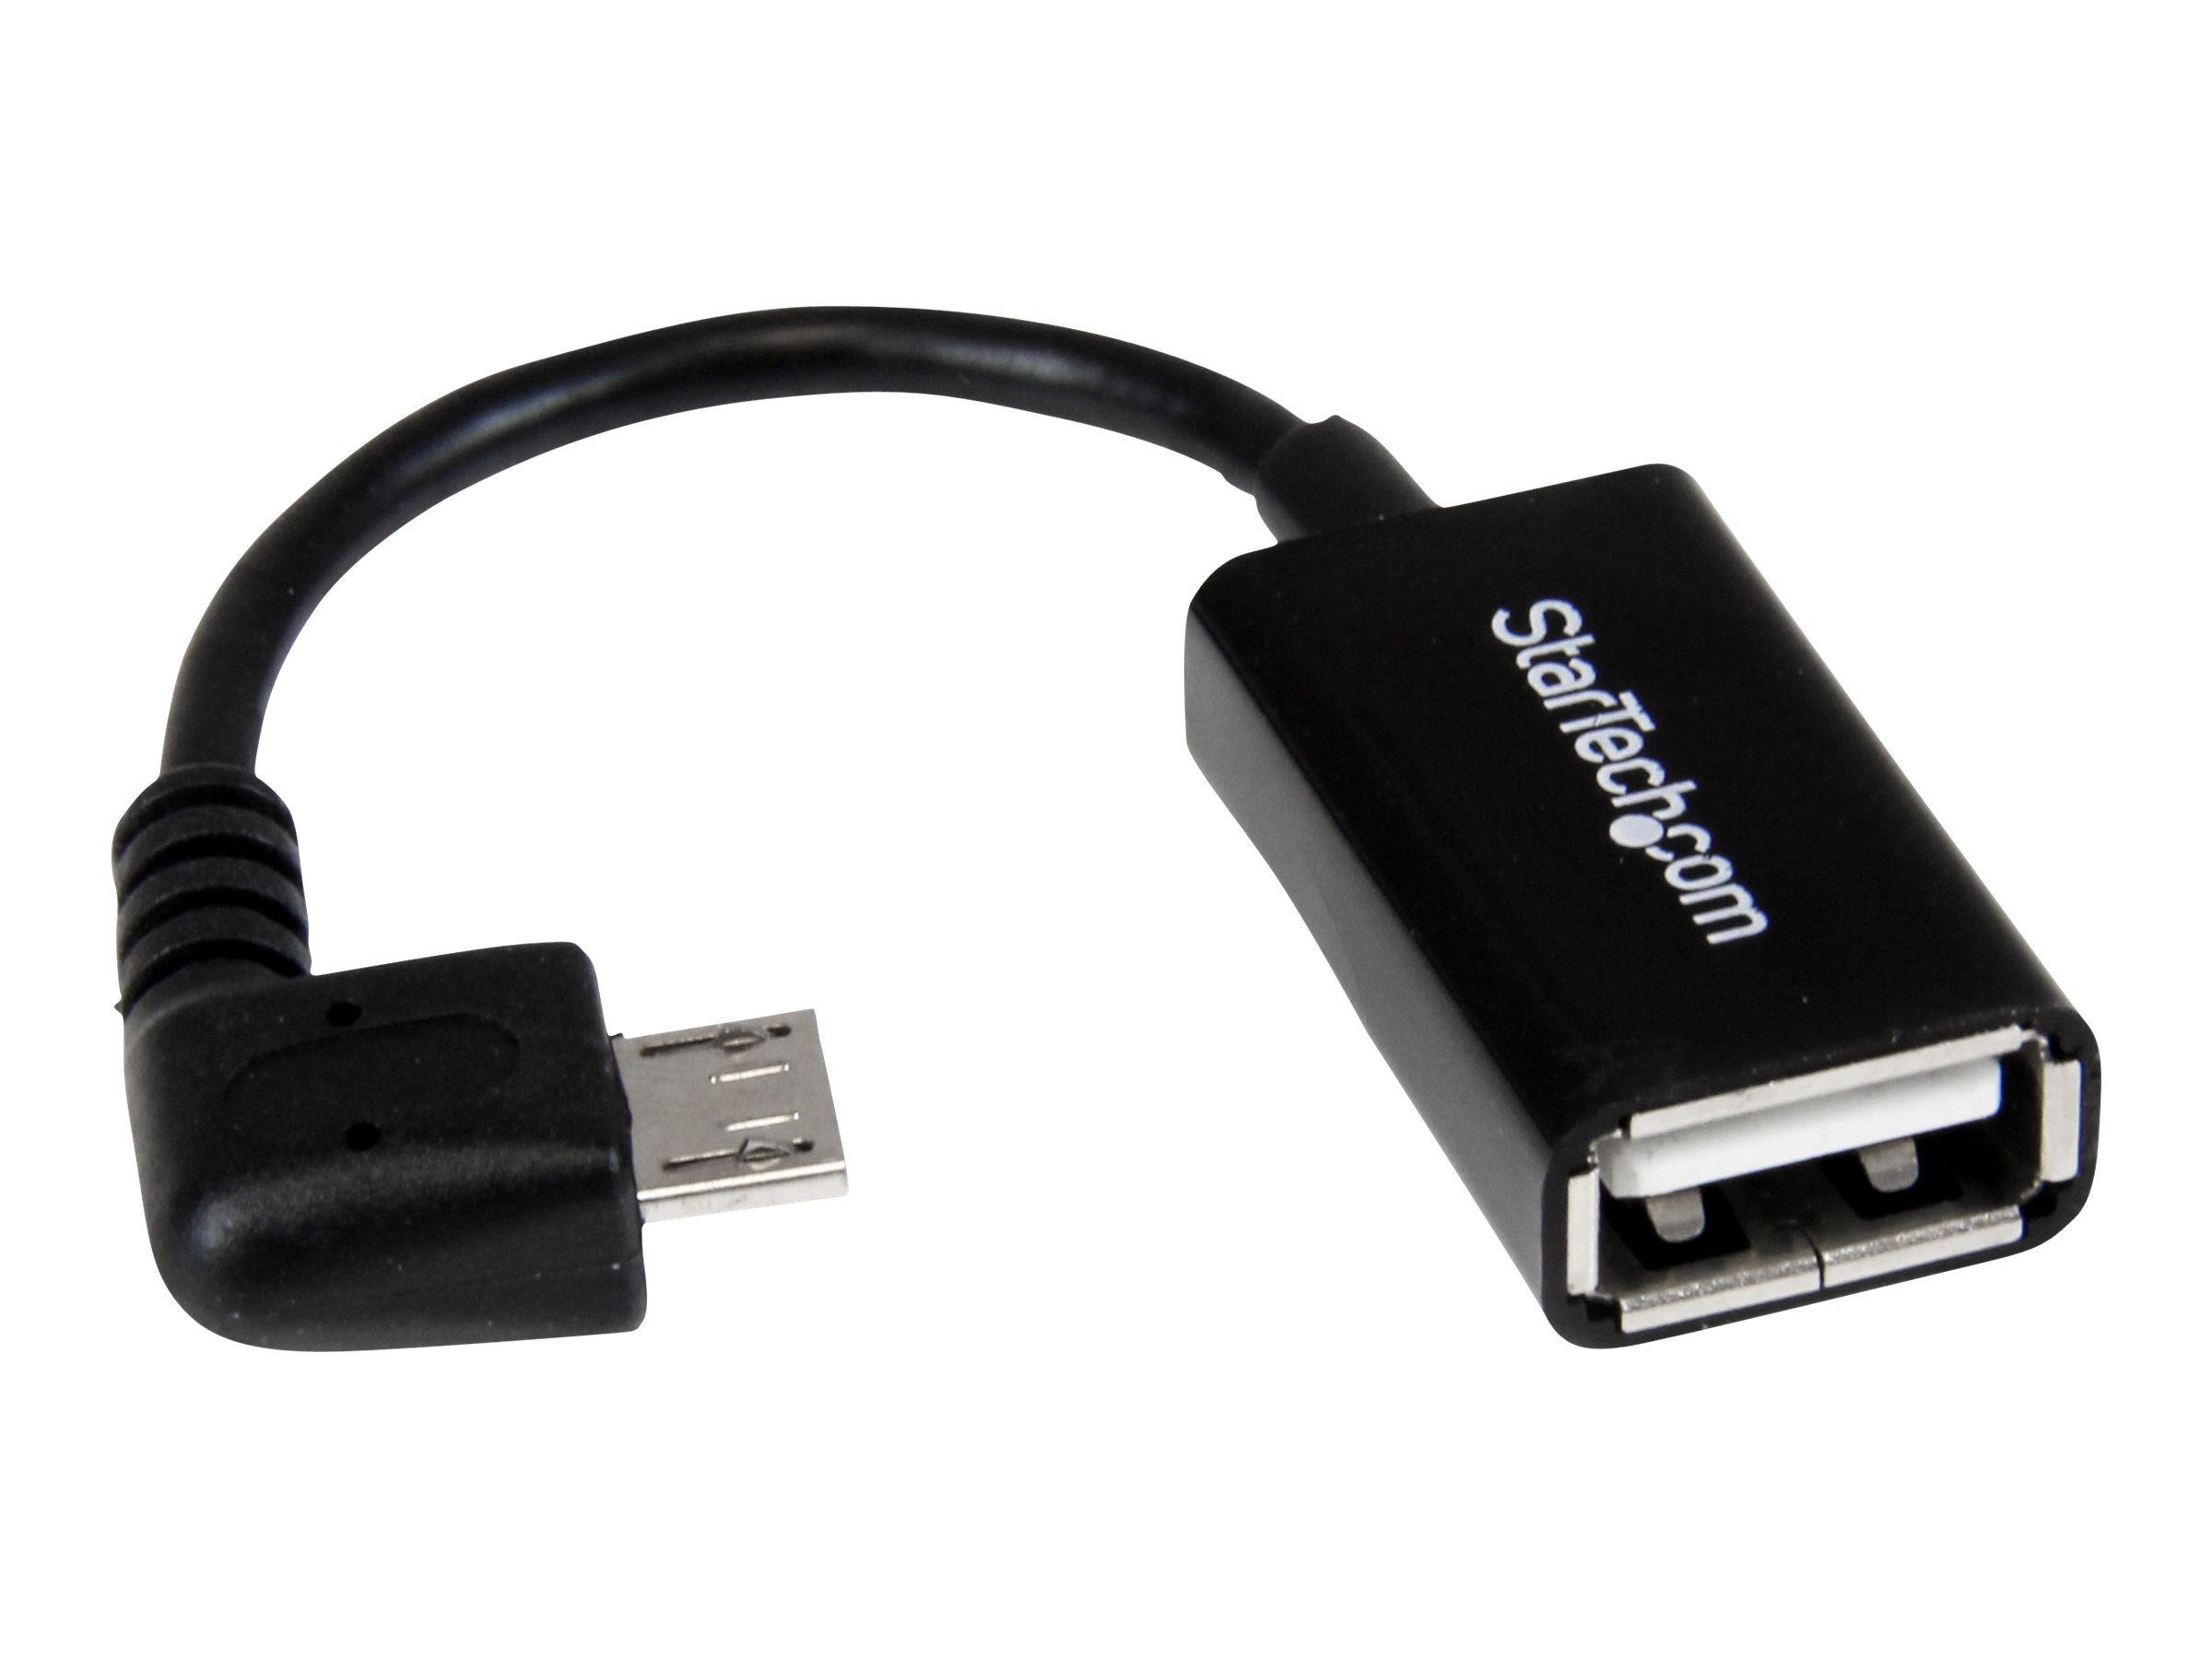 StarTech.com Micro USB rechts gewinkelt auf USB OTG Adapter Stecker / Buchse - Micro USB zu USB Kabel 12cm - On The Go Kabel - S